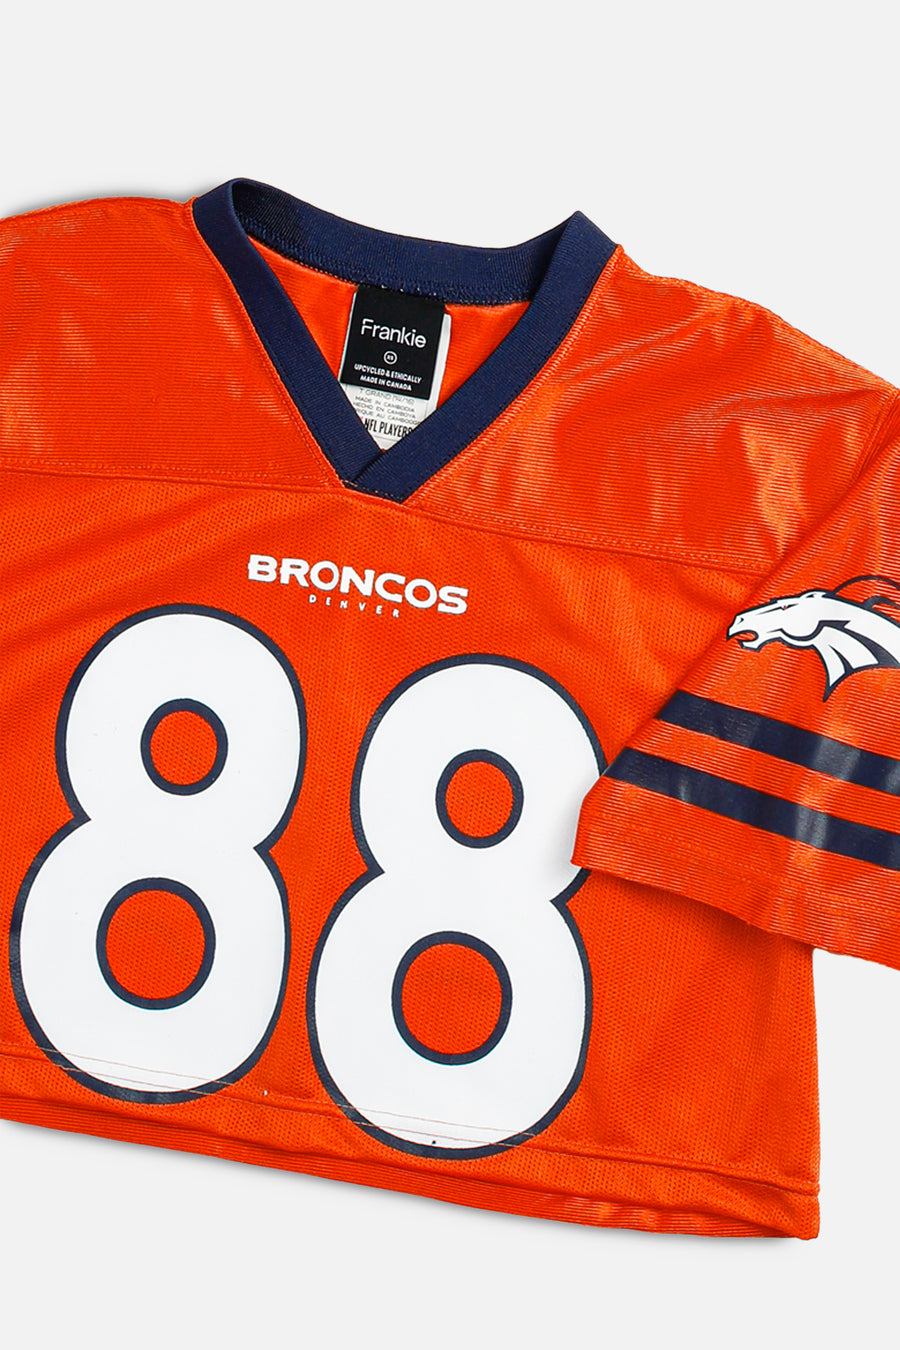 Rework Crop Denver Broncos NFL Jersey - XS